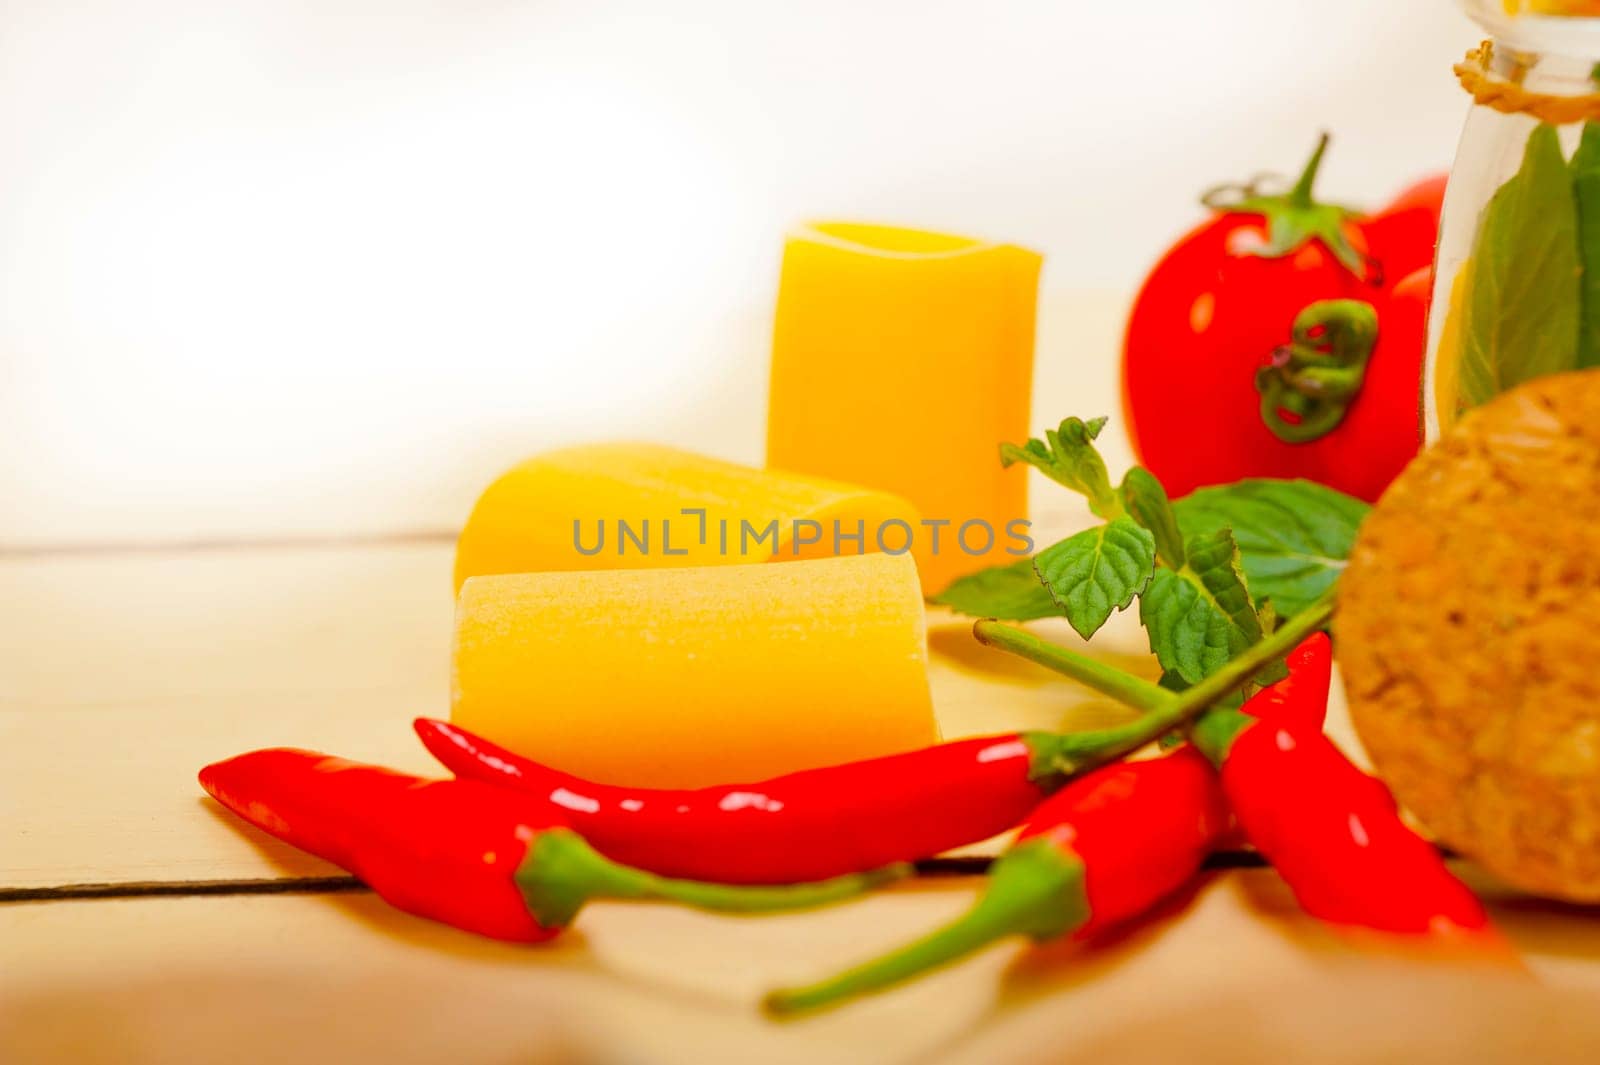 Italian pasta paccheri with tomato mint and chili pepper by keko64